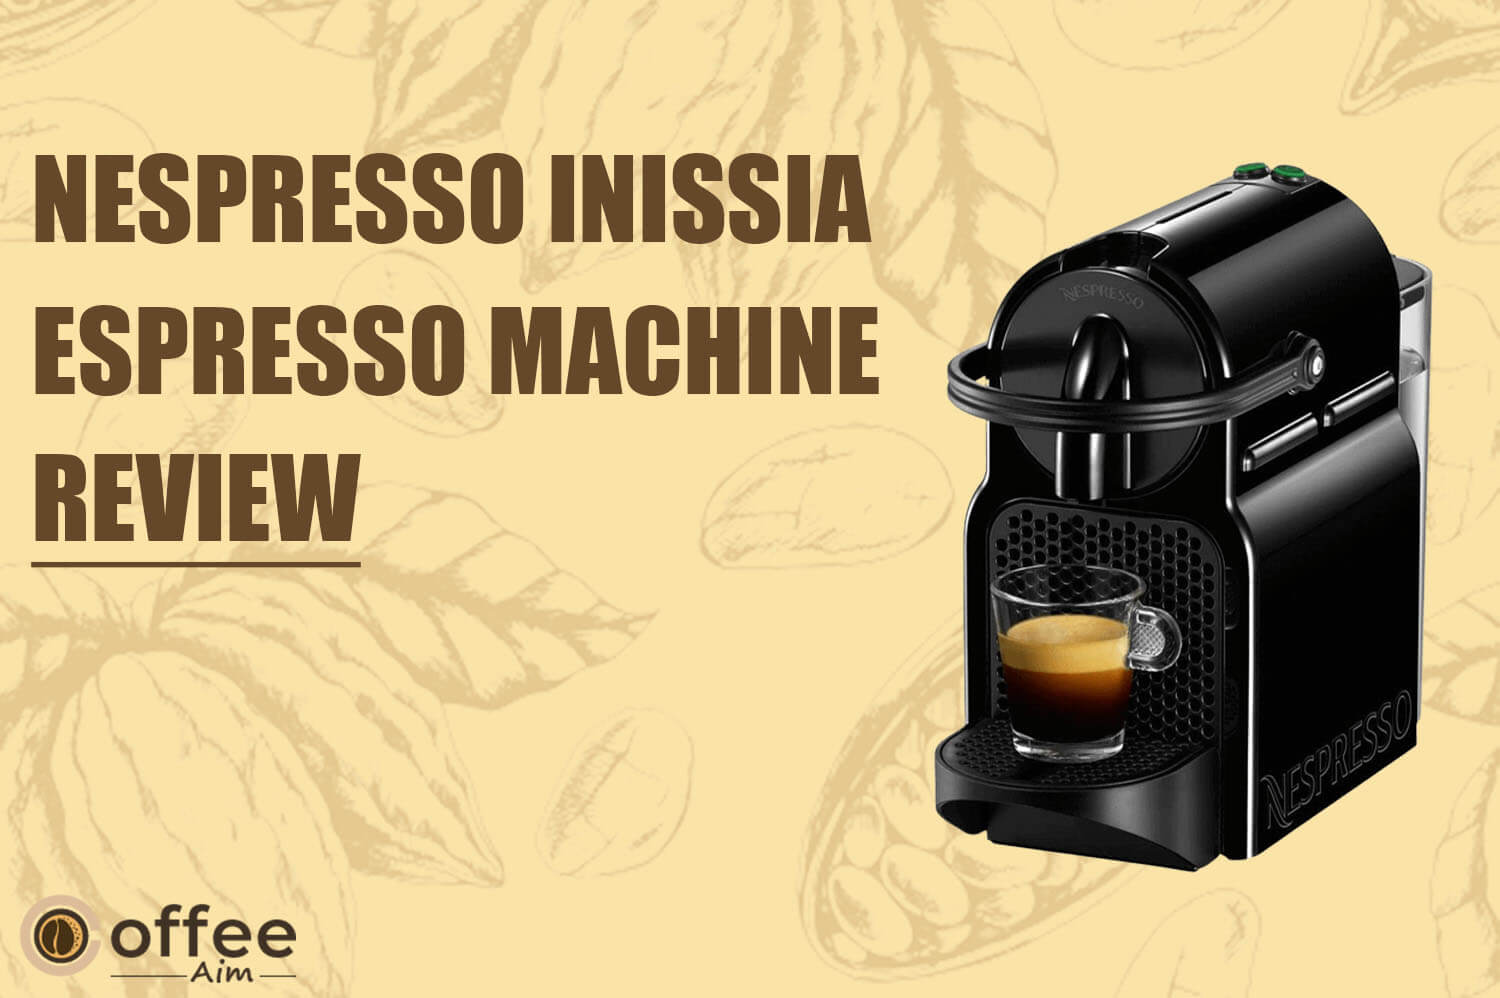 Featured image for the article "Nespresso Inissia Espresso Machine review"